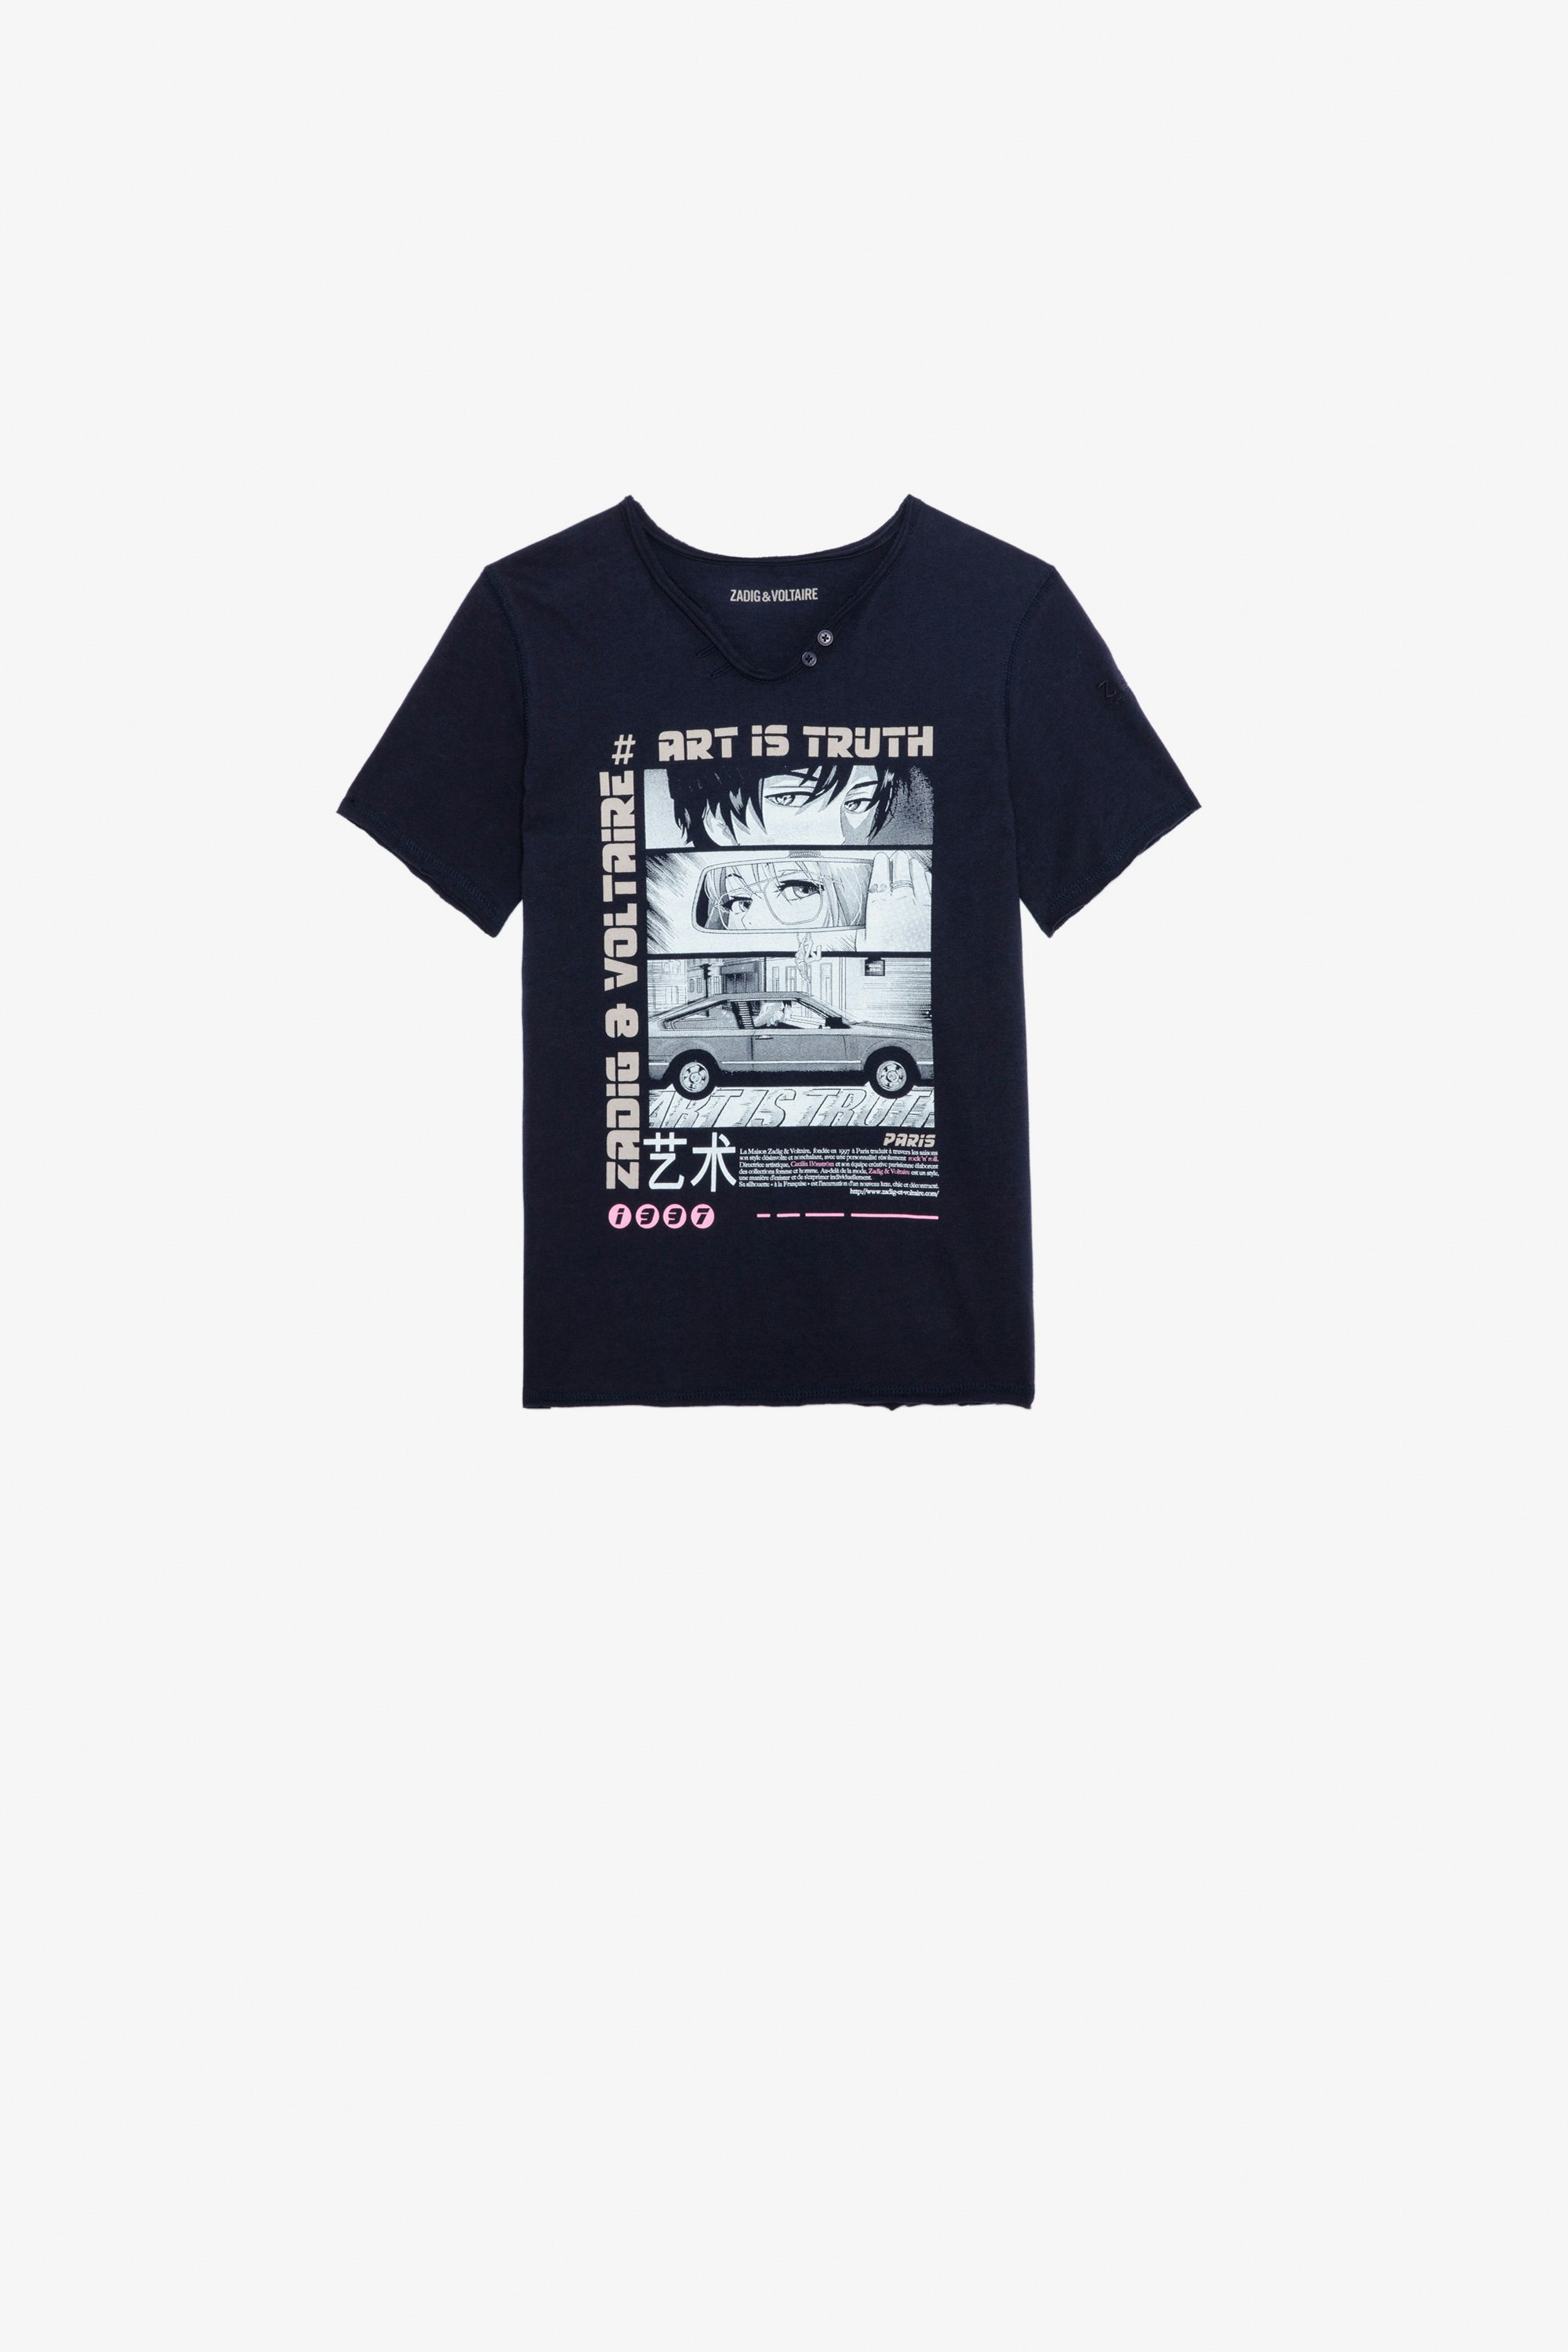 Boxer Boys’ T-Shirt Boys’ navy blue short-sleeved cotton jersey T-shirt with manga print.